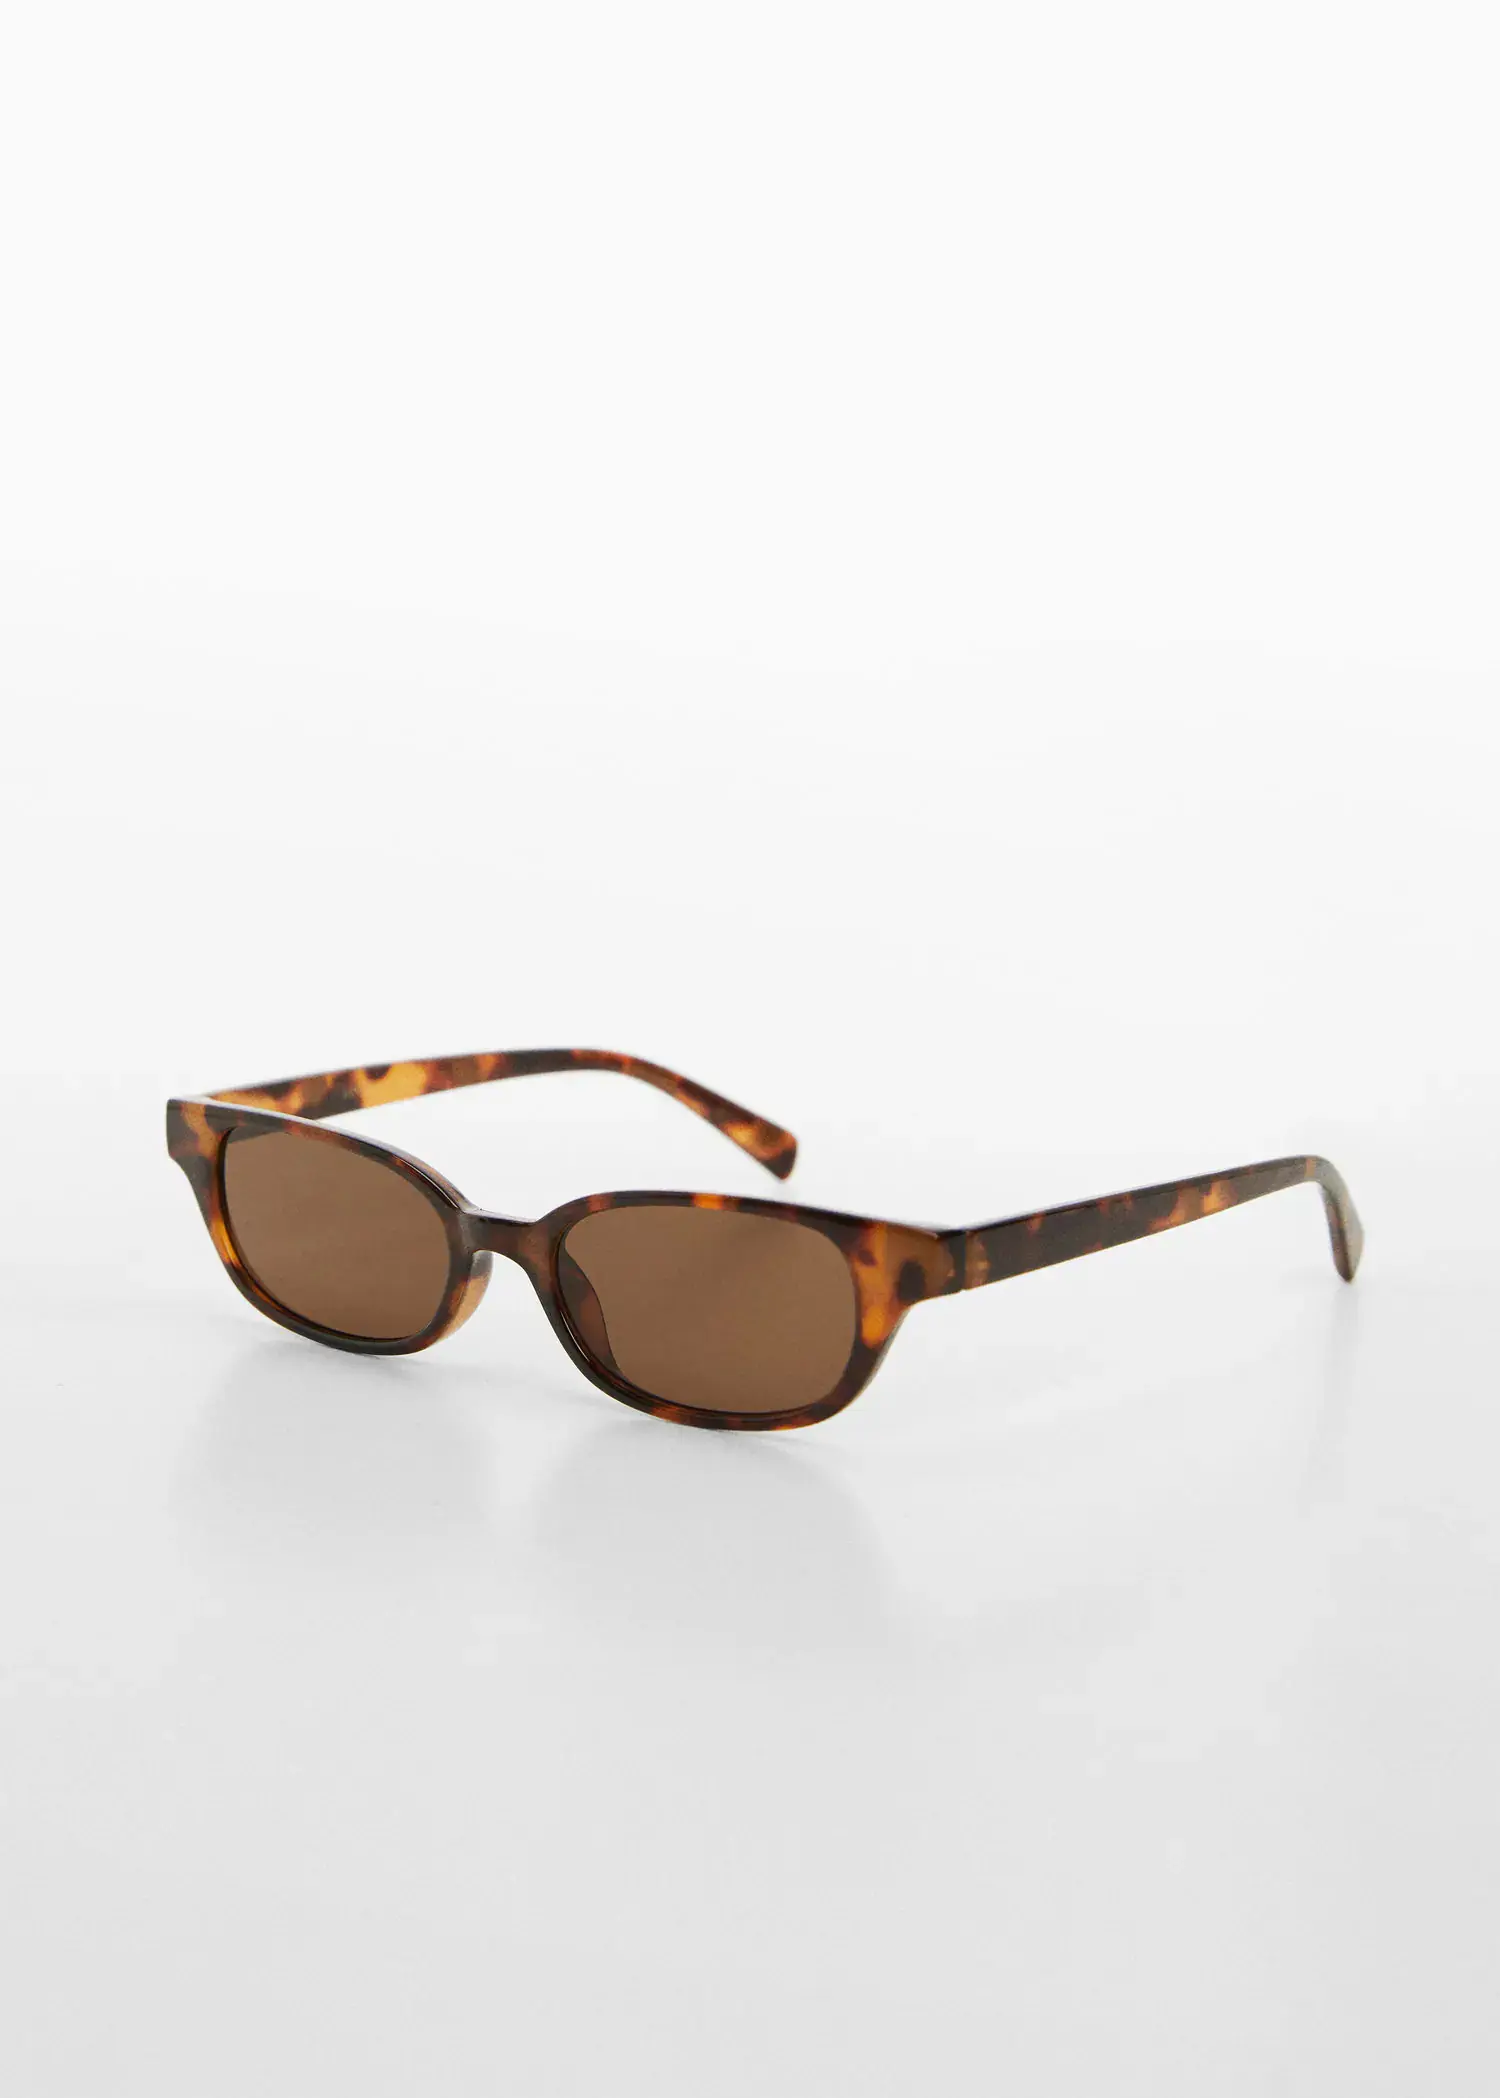 Mango Retro style sunglasses. 2